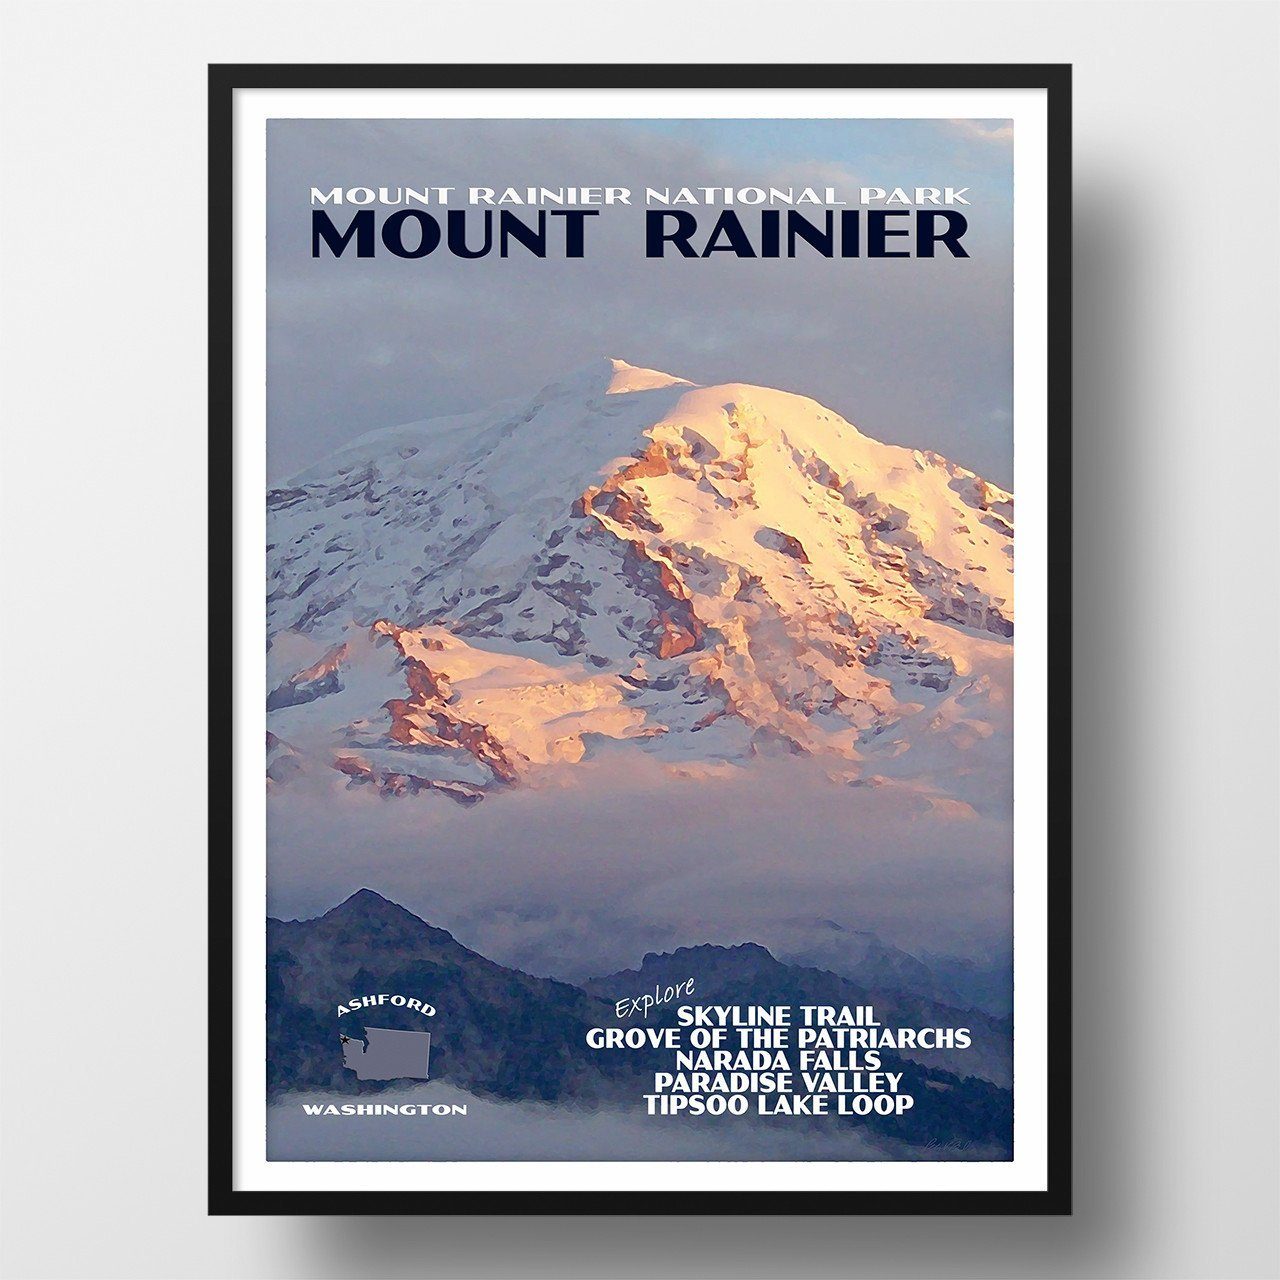 Mount Rainier National Park T Shirt Washington Bear Vintage